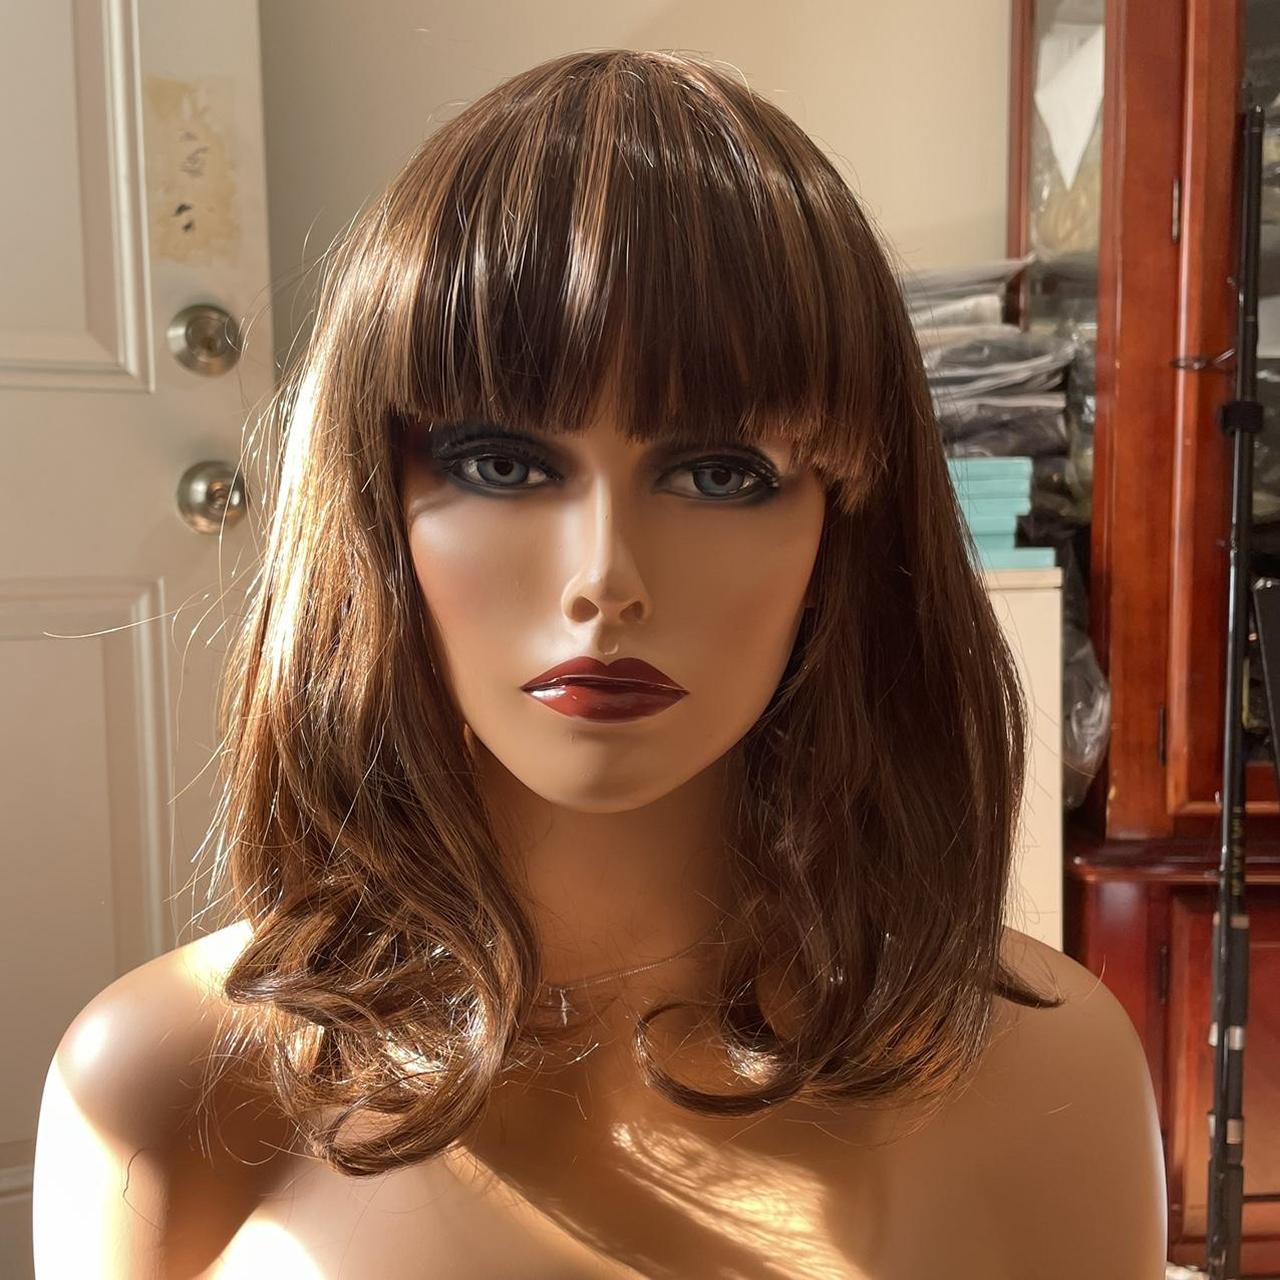 Human hair blend wig - Women's accessories